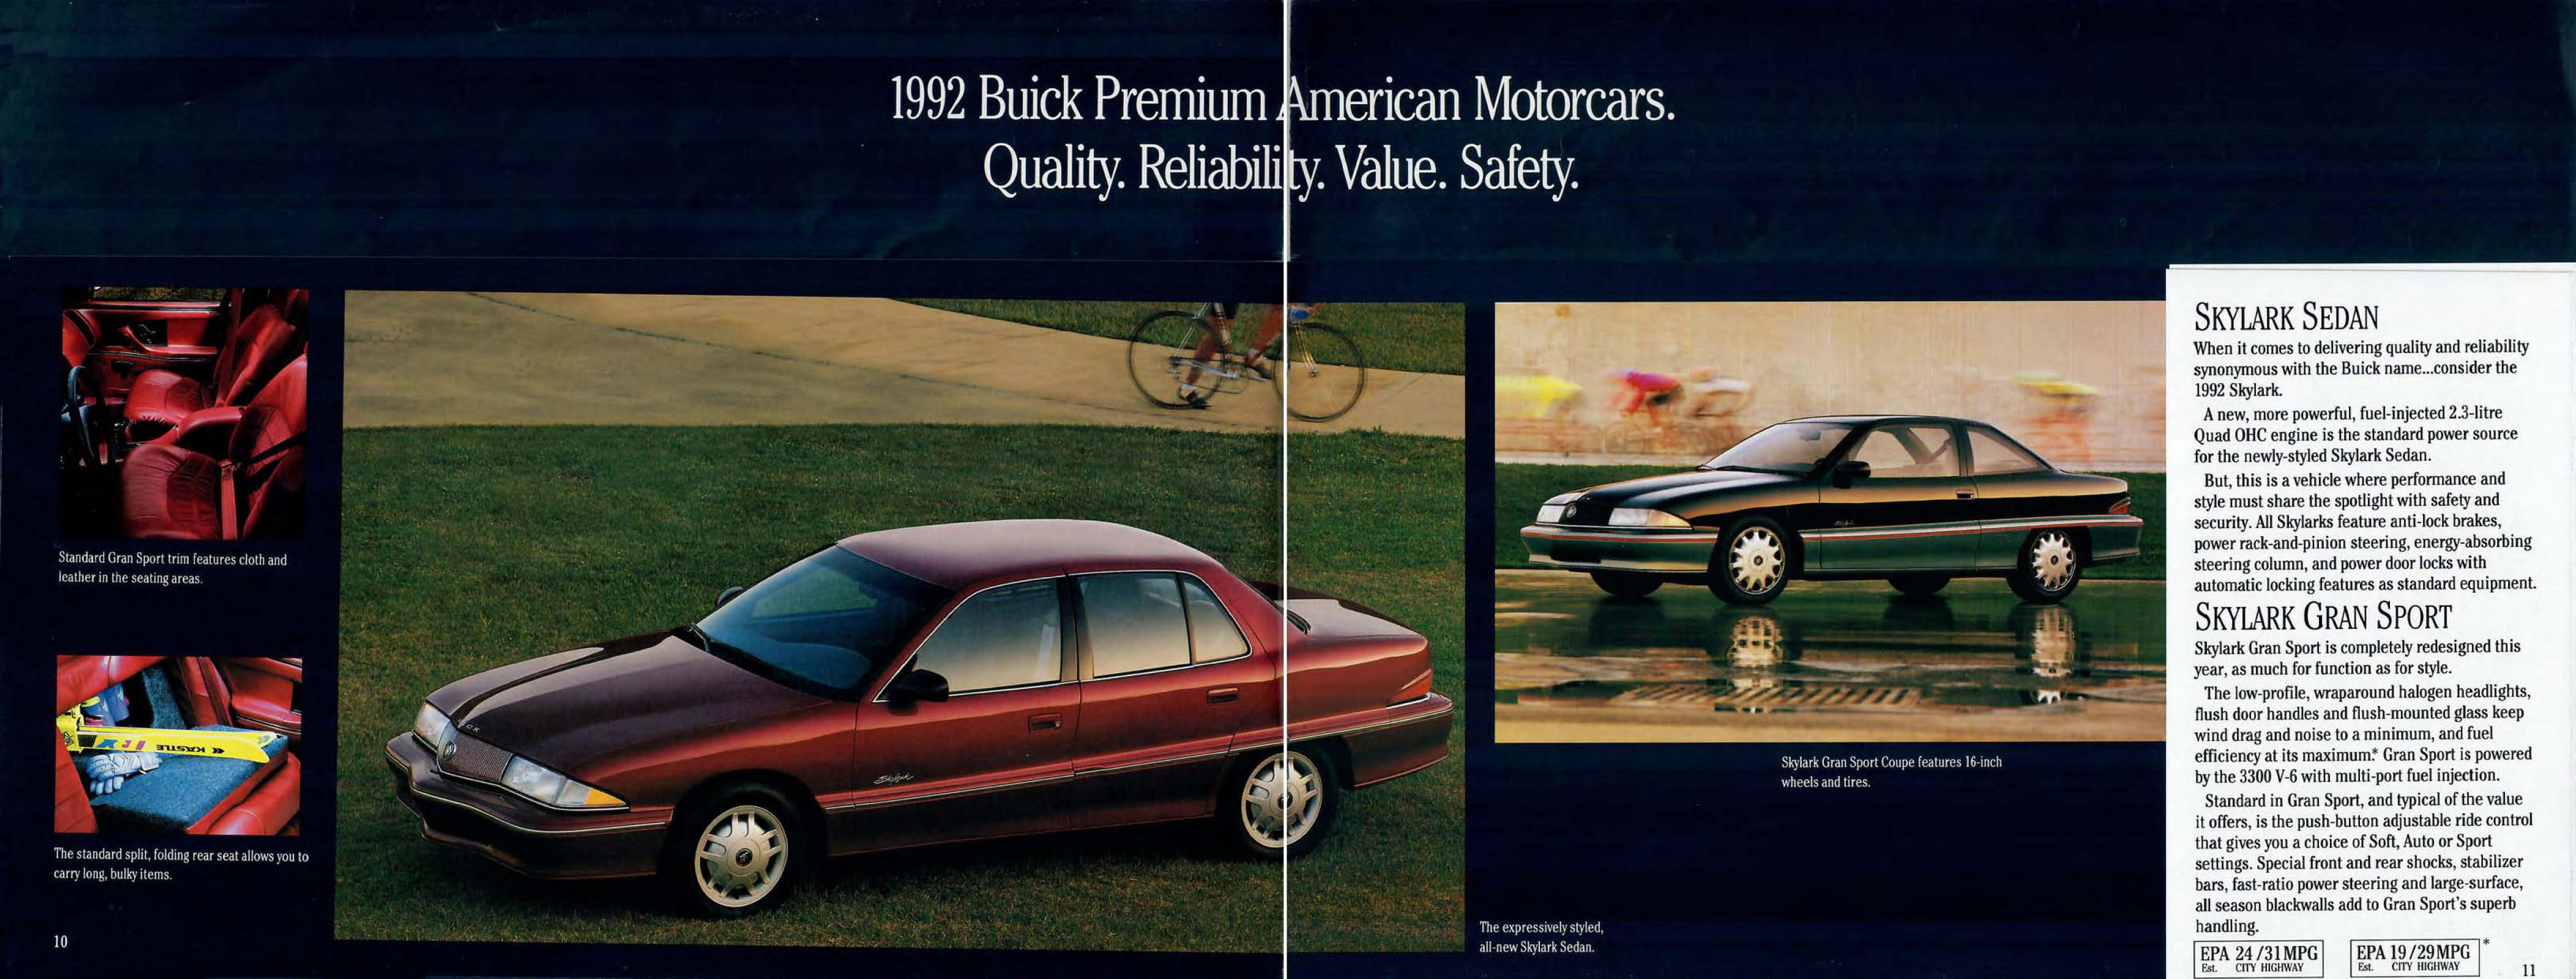 1992 Buick Full Line Handout-10-11